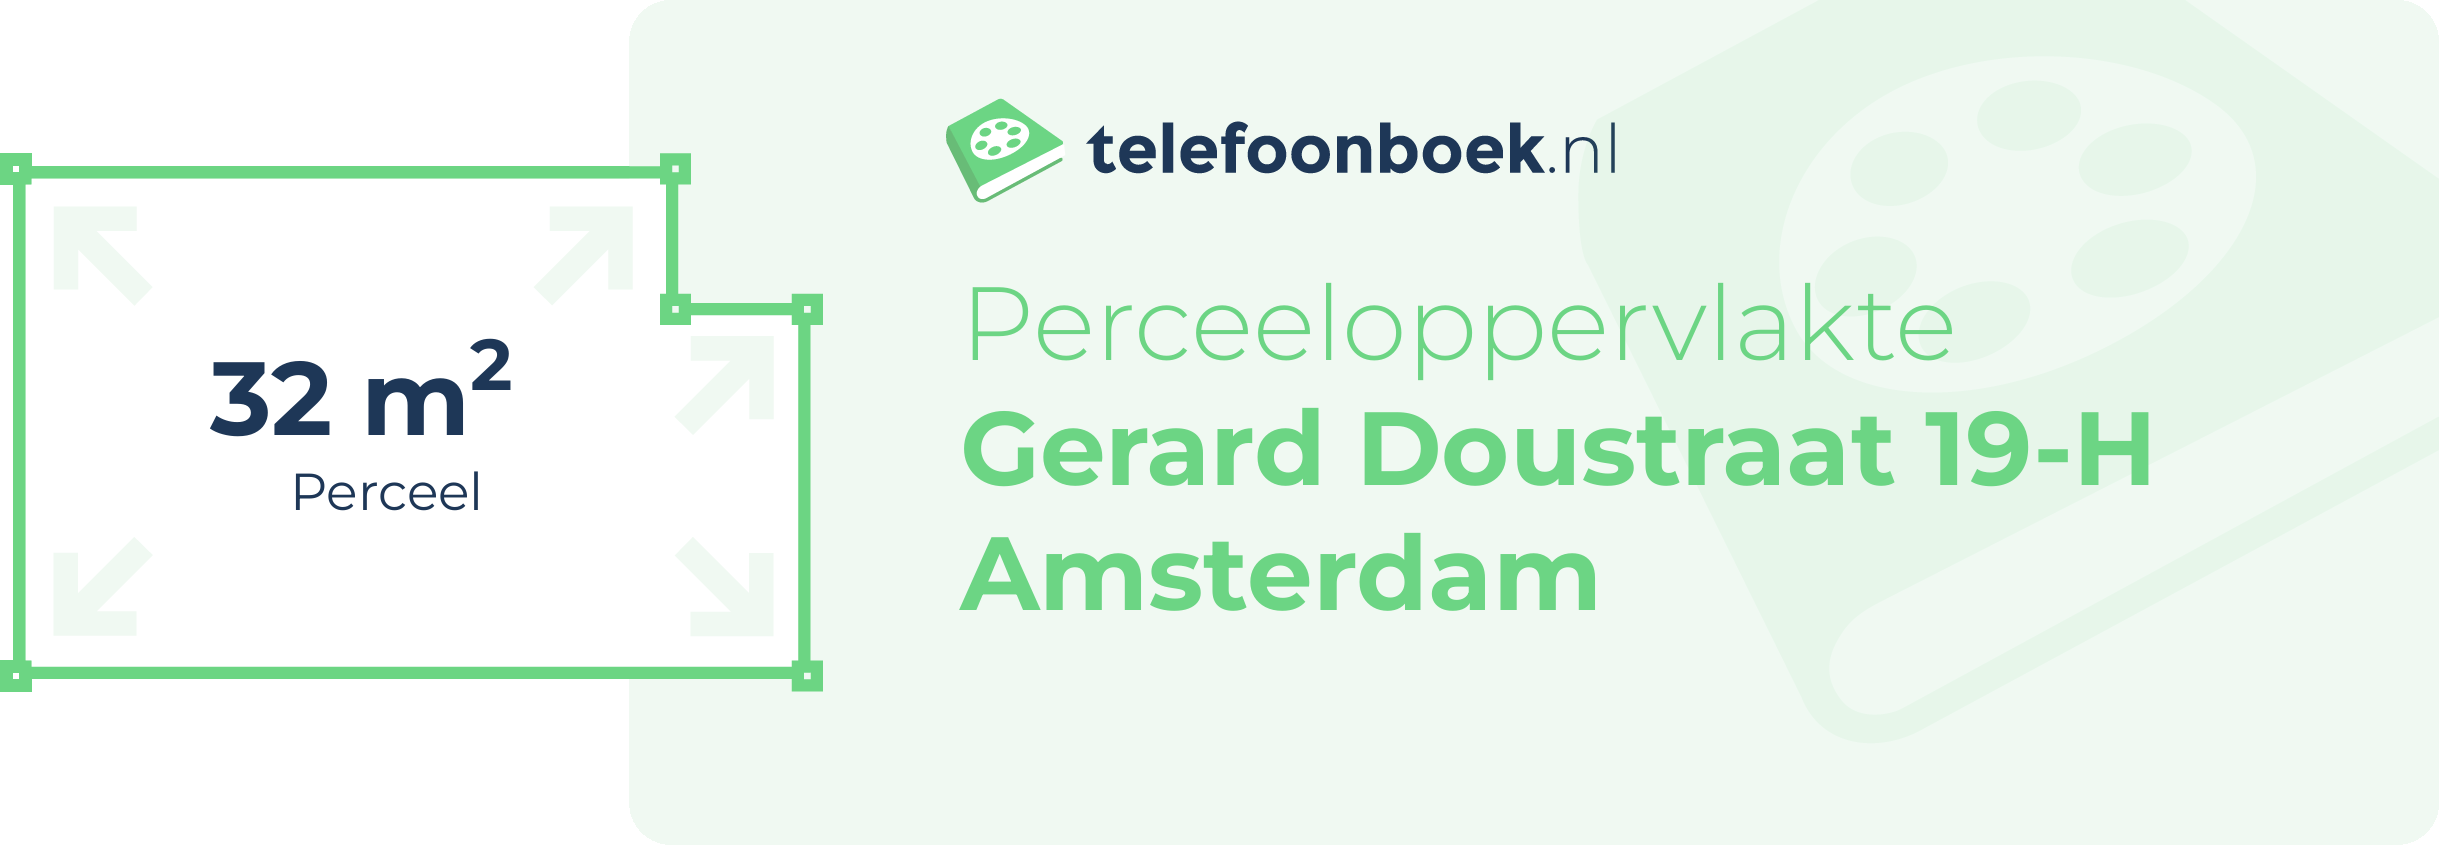 Perceeloppervlakte Gerard Doustraat 19-H Amsterdam